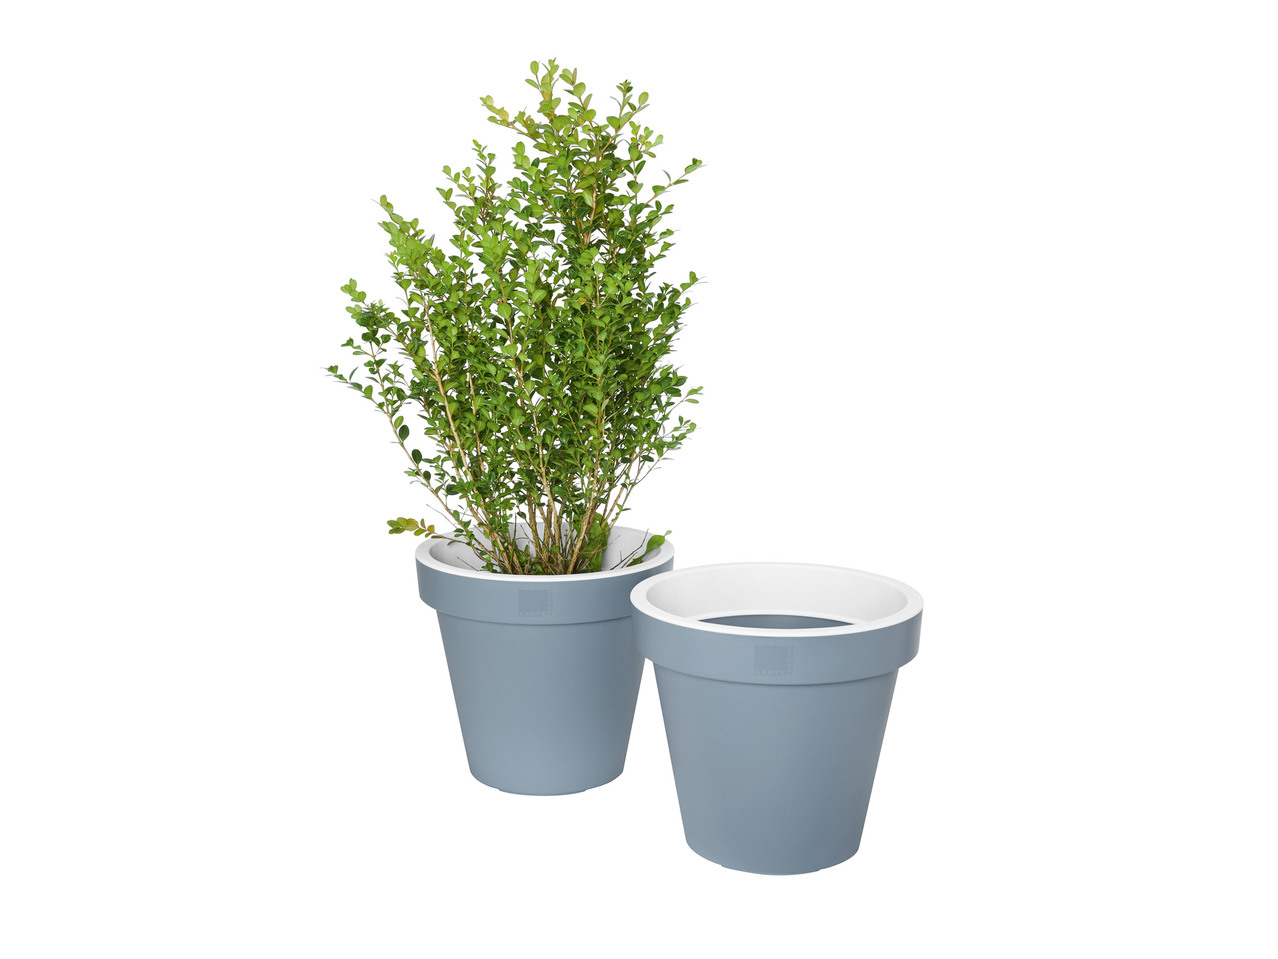 FLORABEST(R) Vaso para Plantas